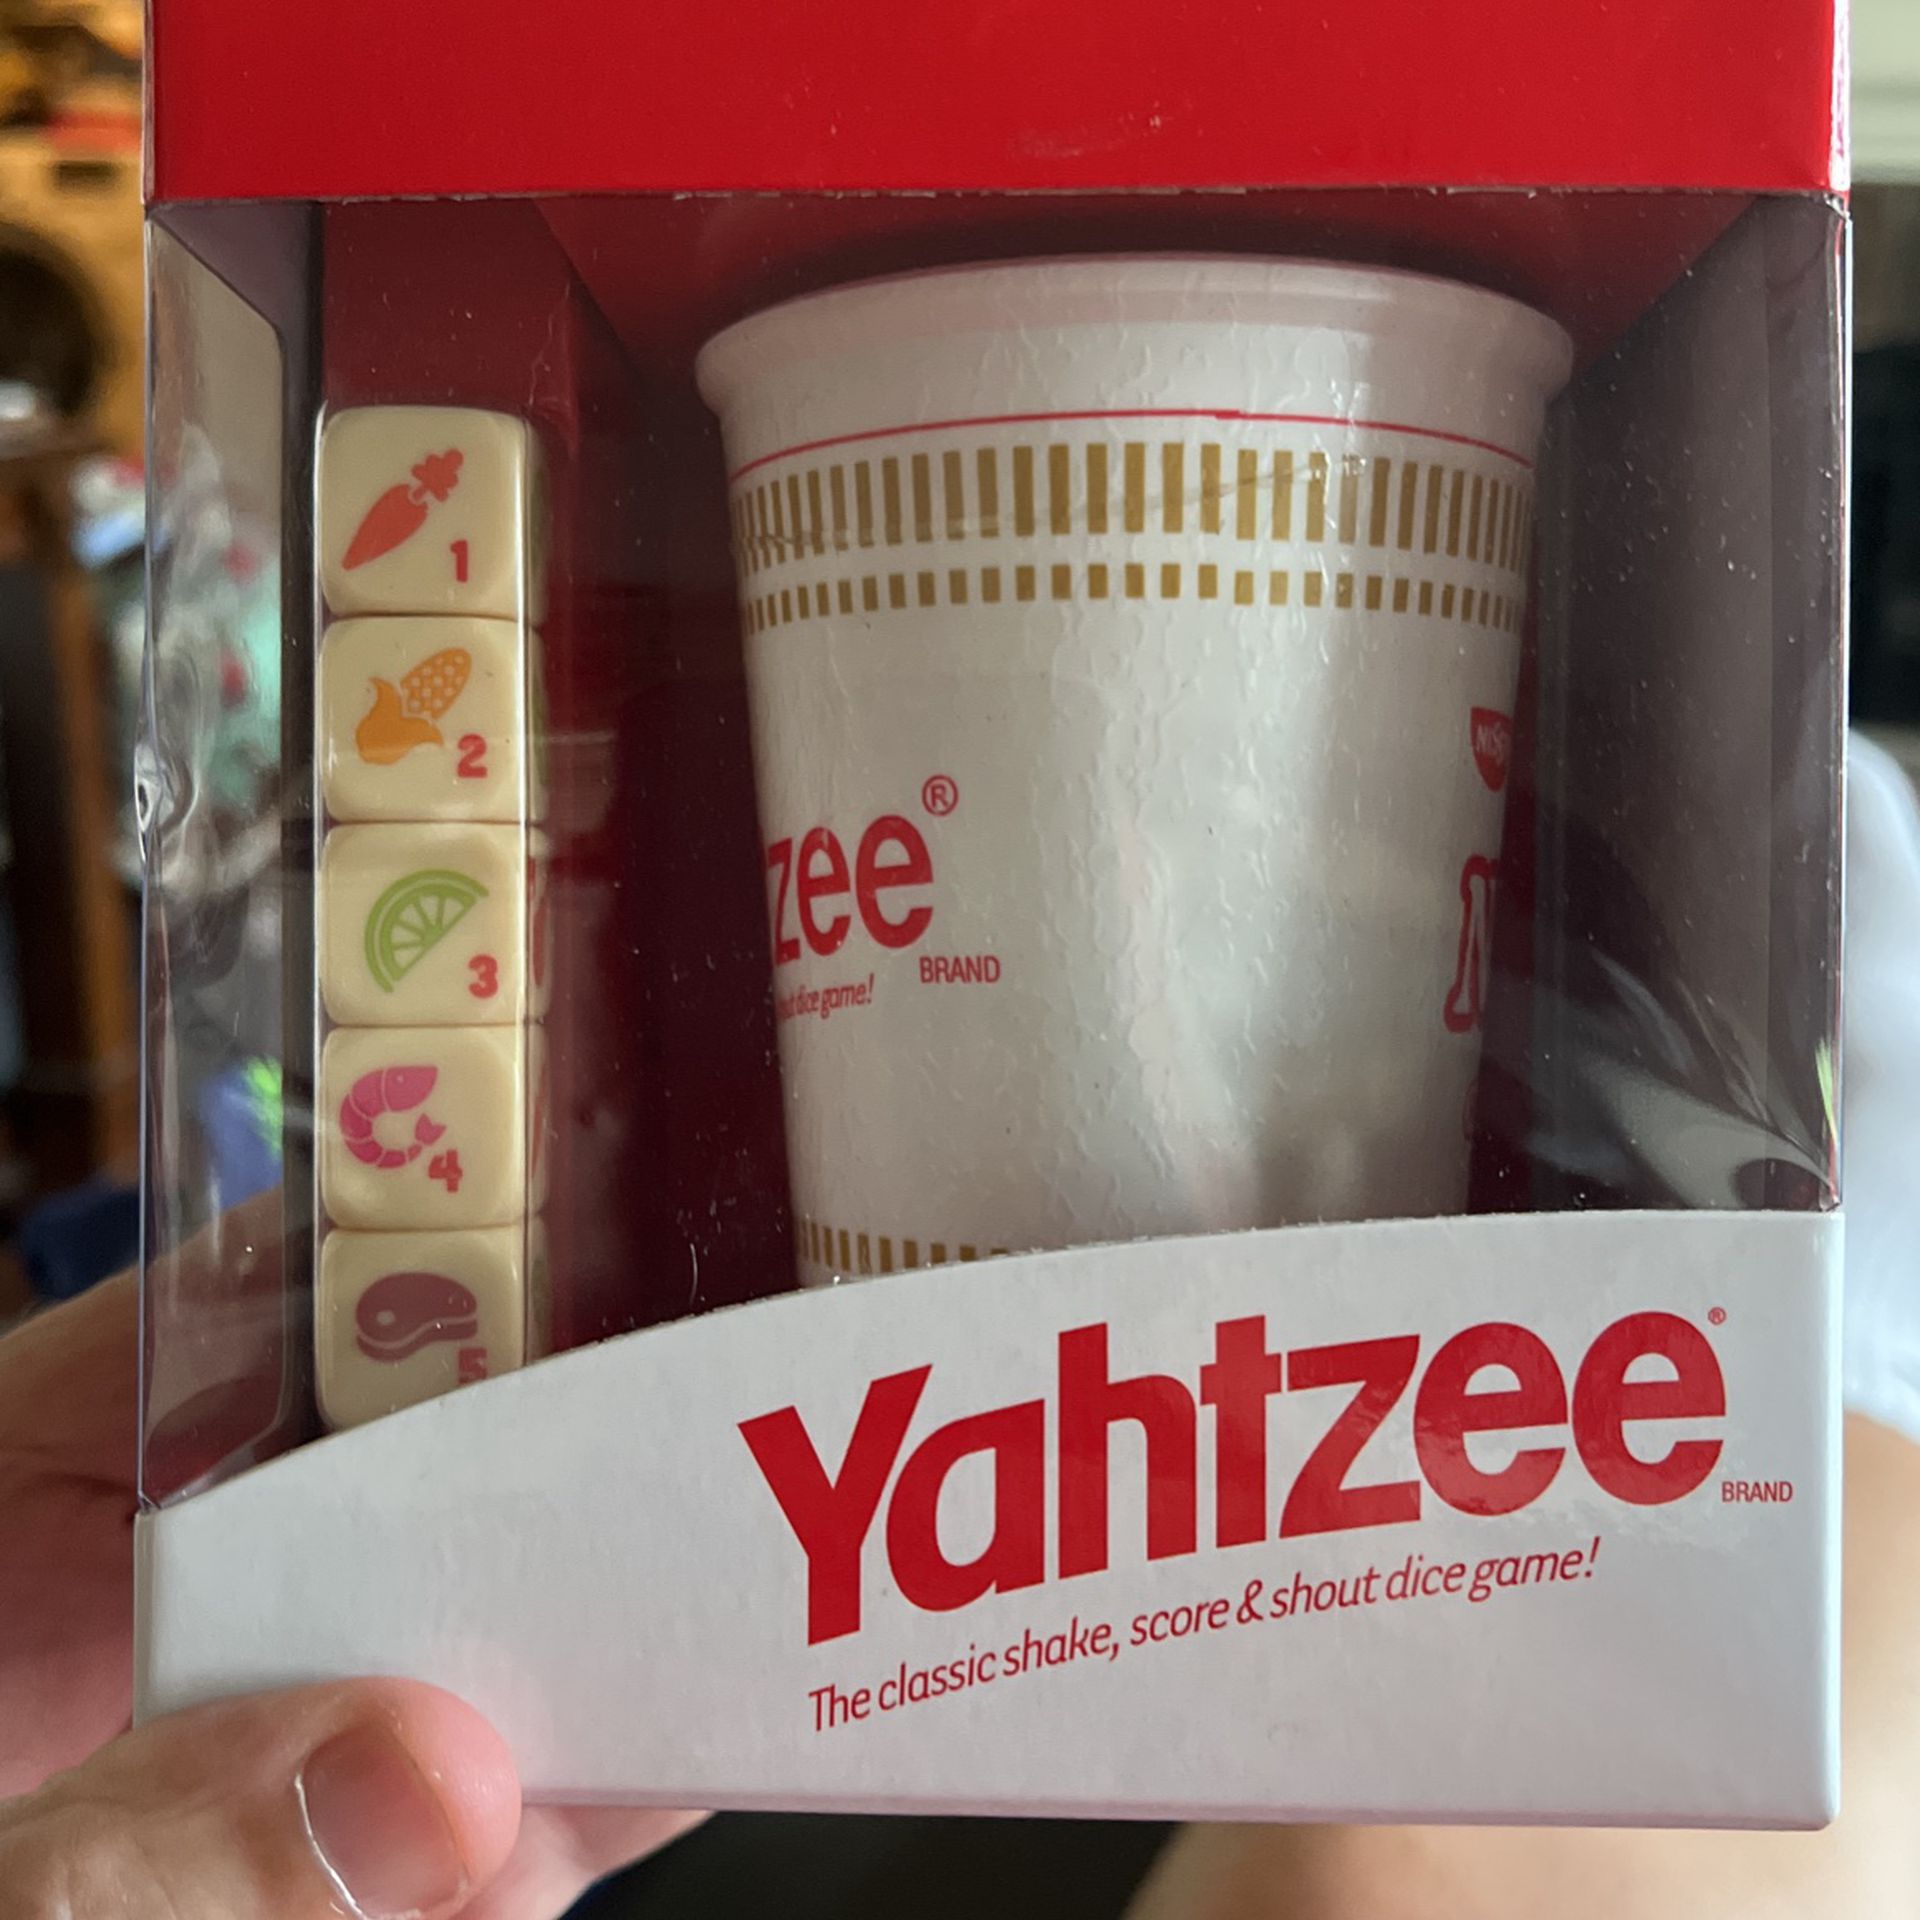  Yahtzee Cup of Noodles Edition